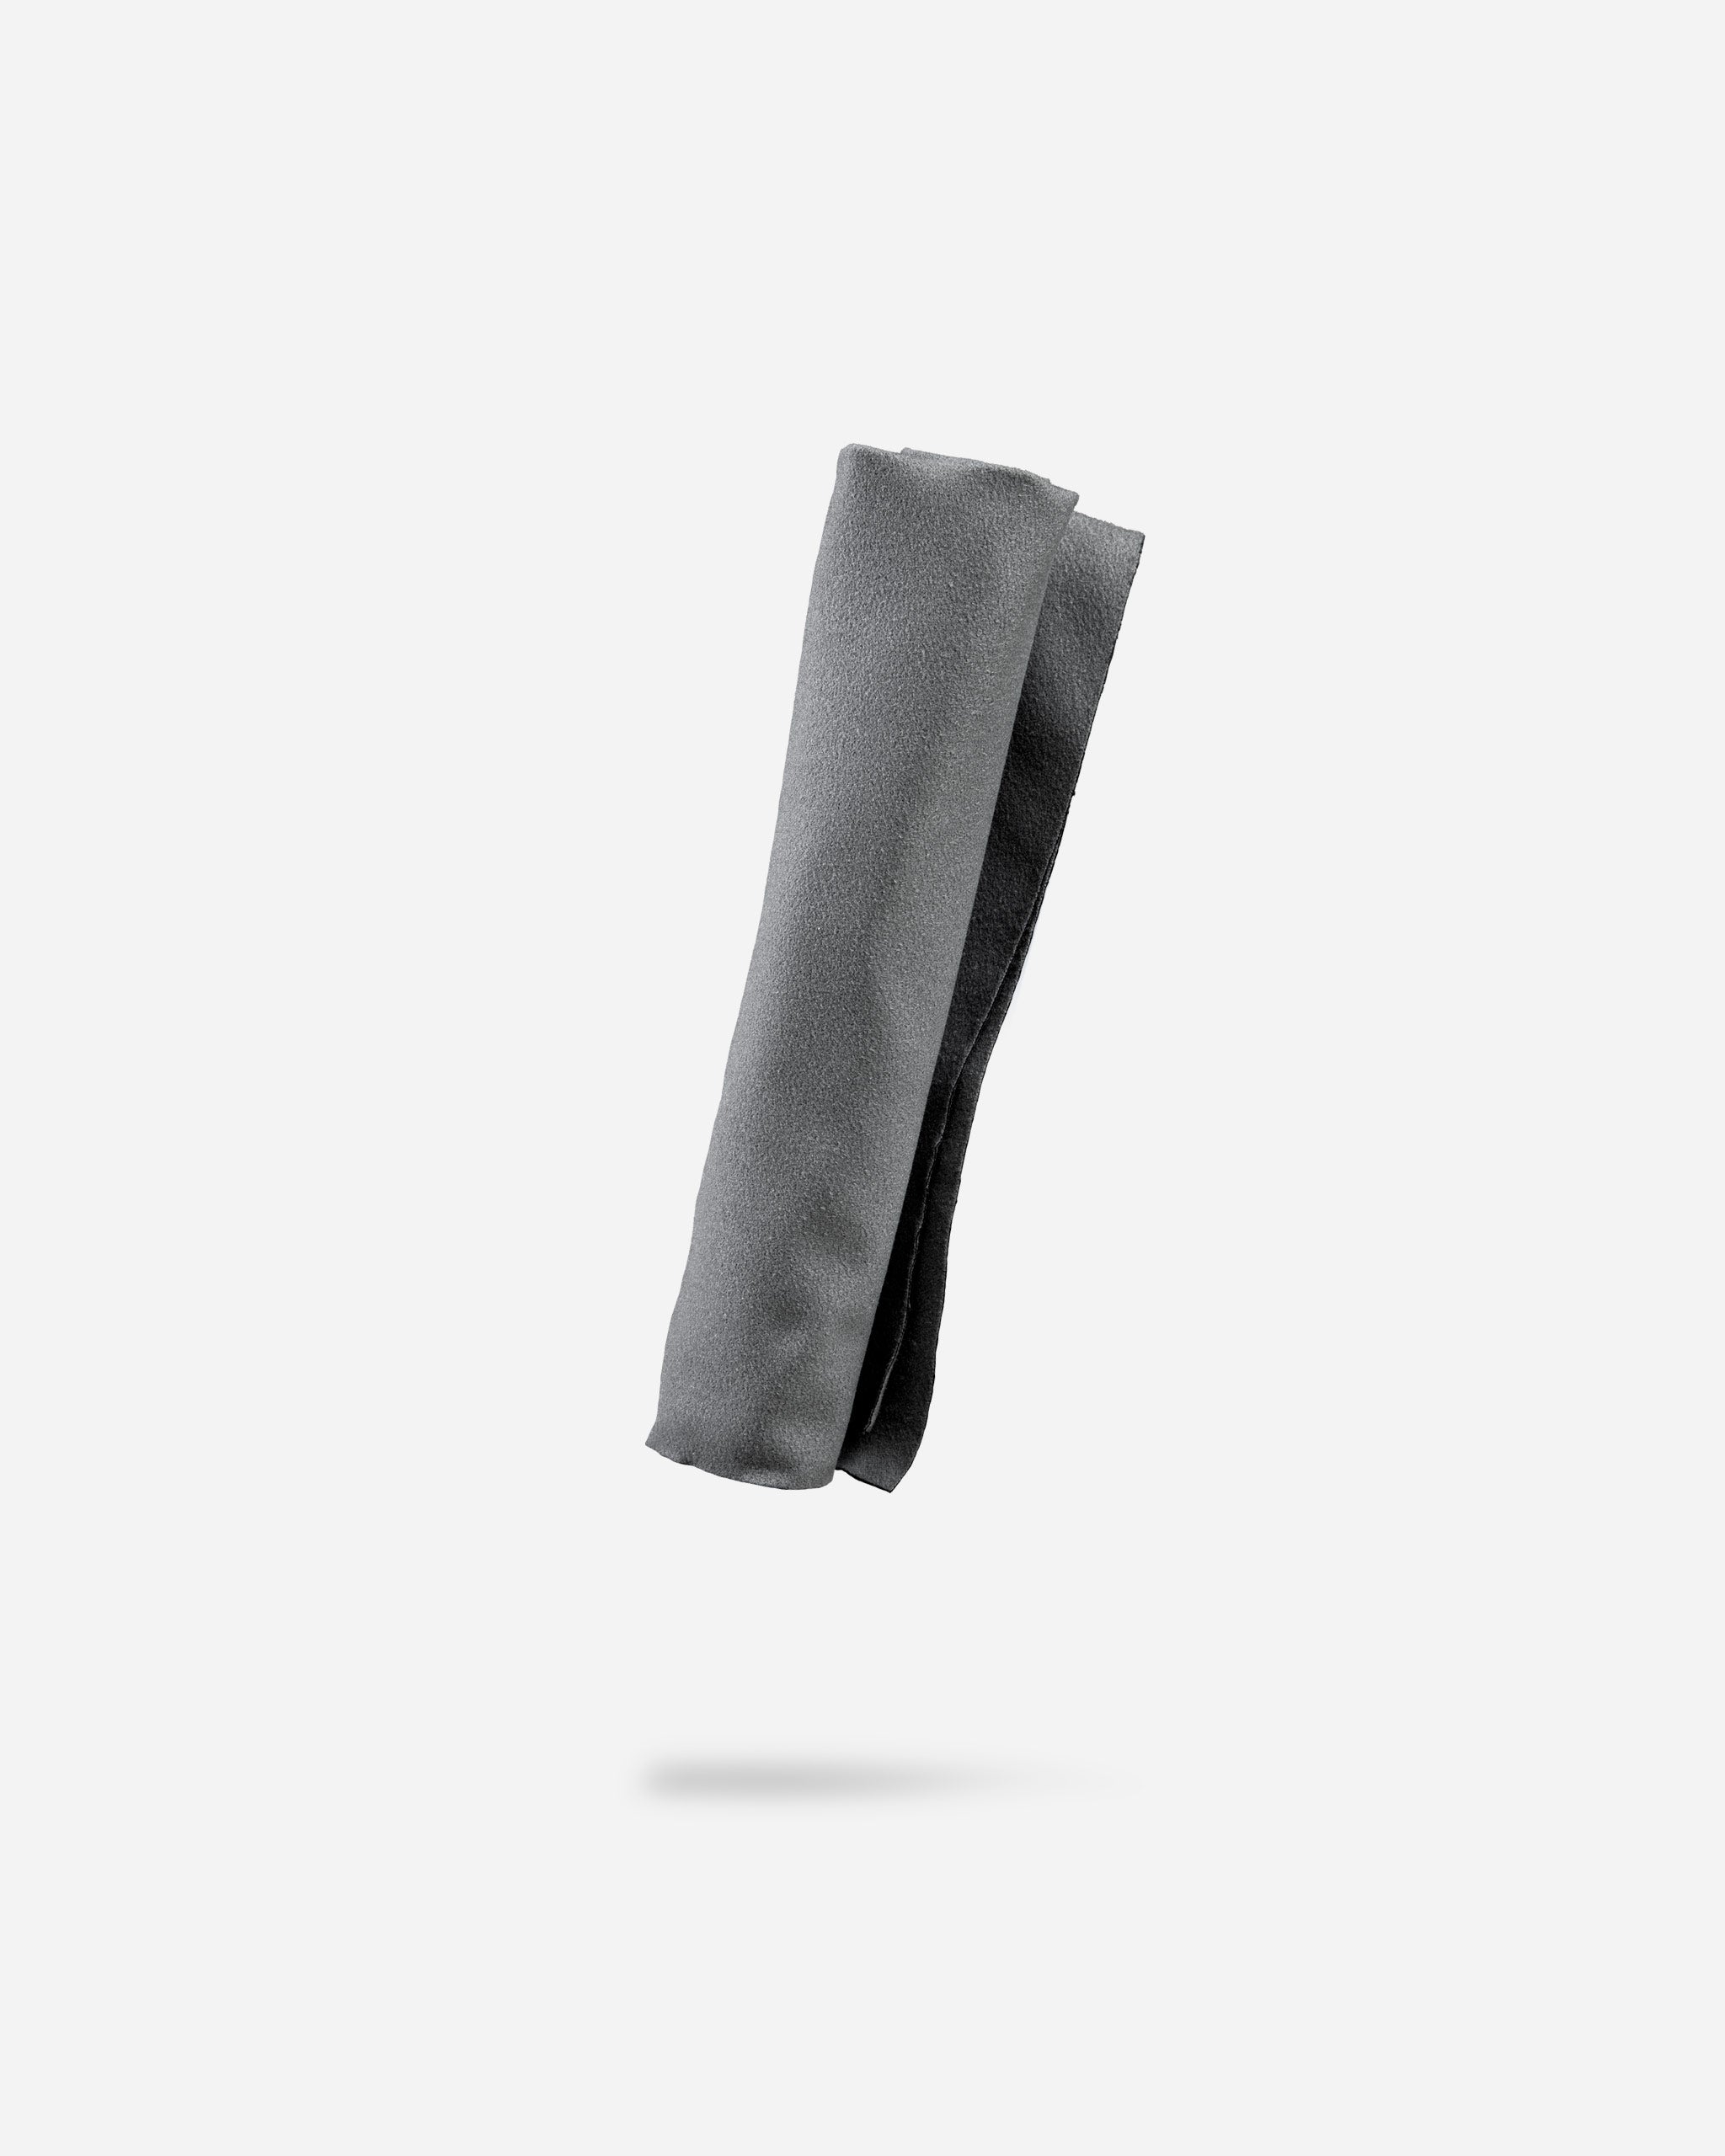 Adam's Single Soft Microfiber Towel - Soft Enough for Even The Most Delicate Fin